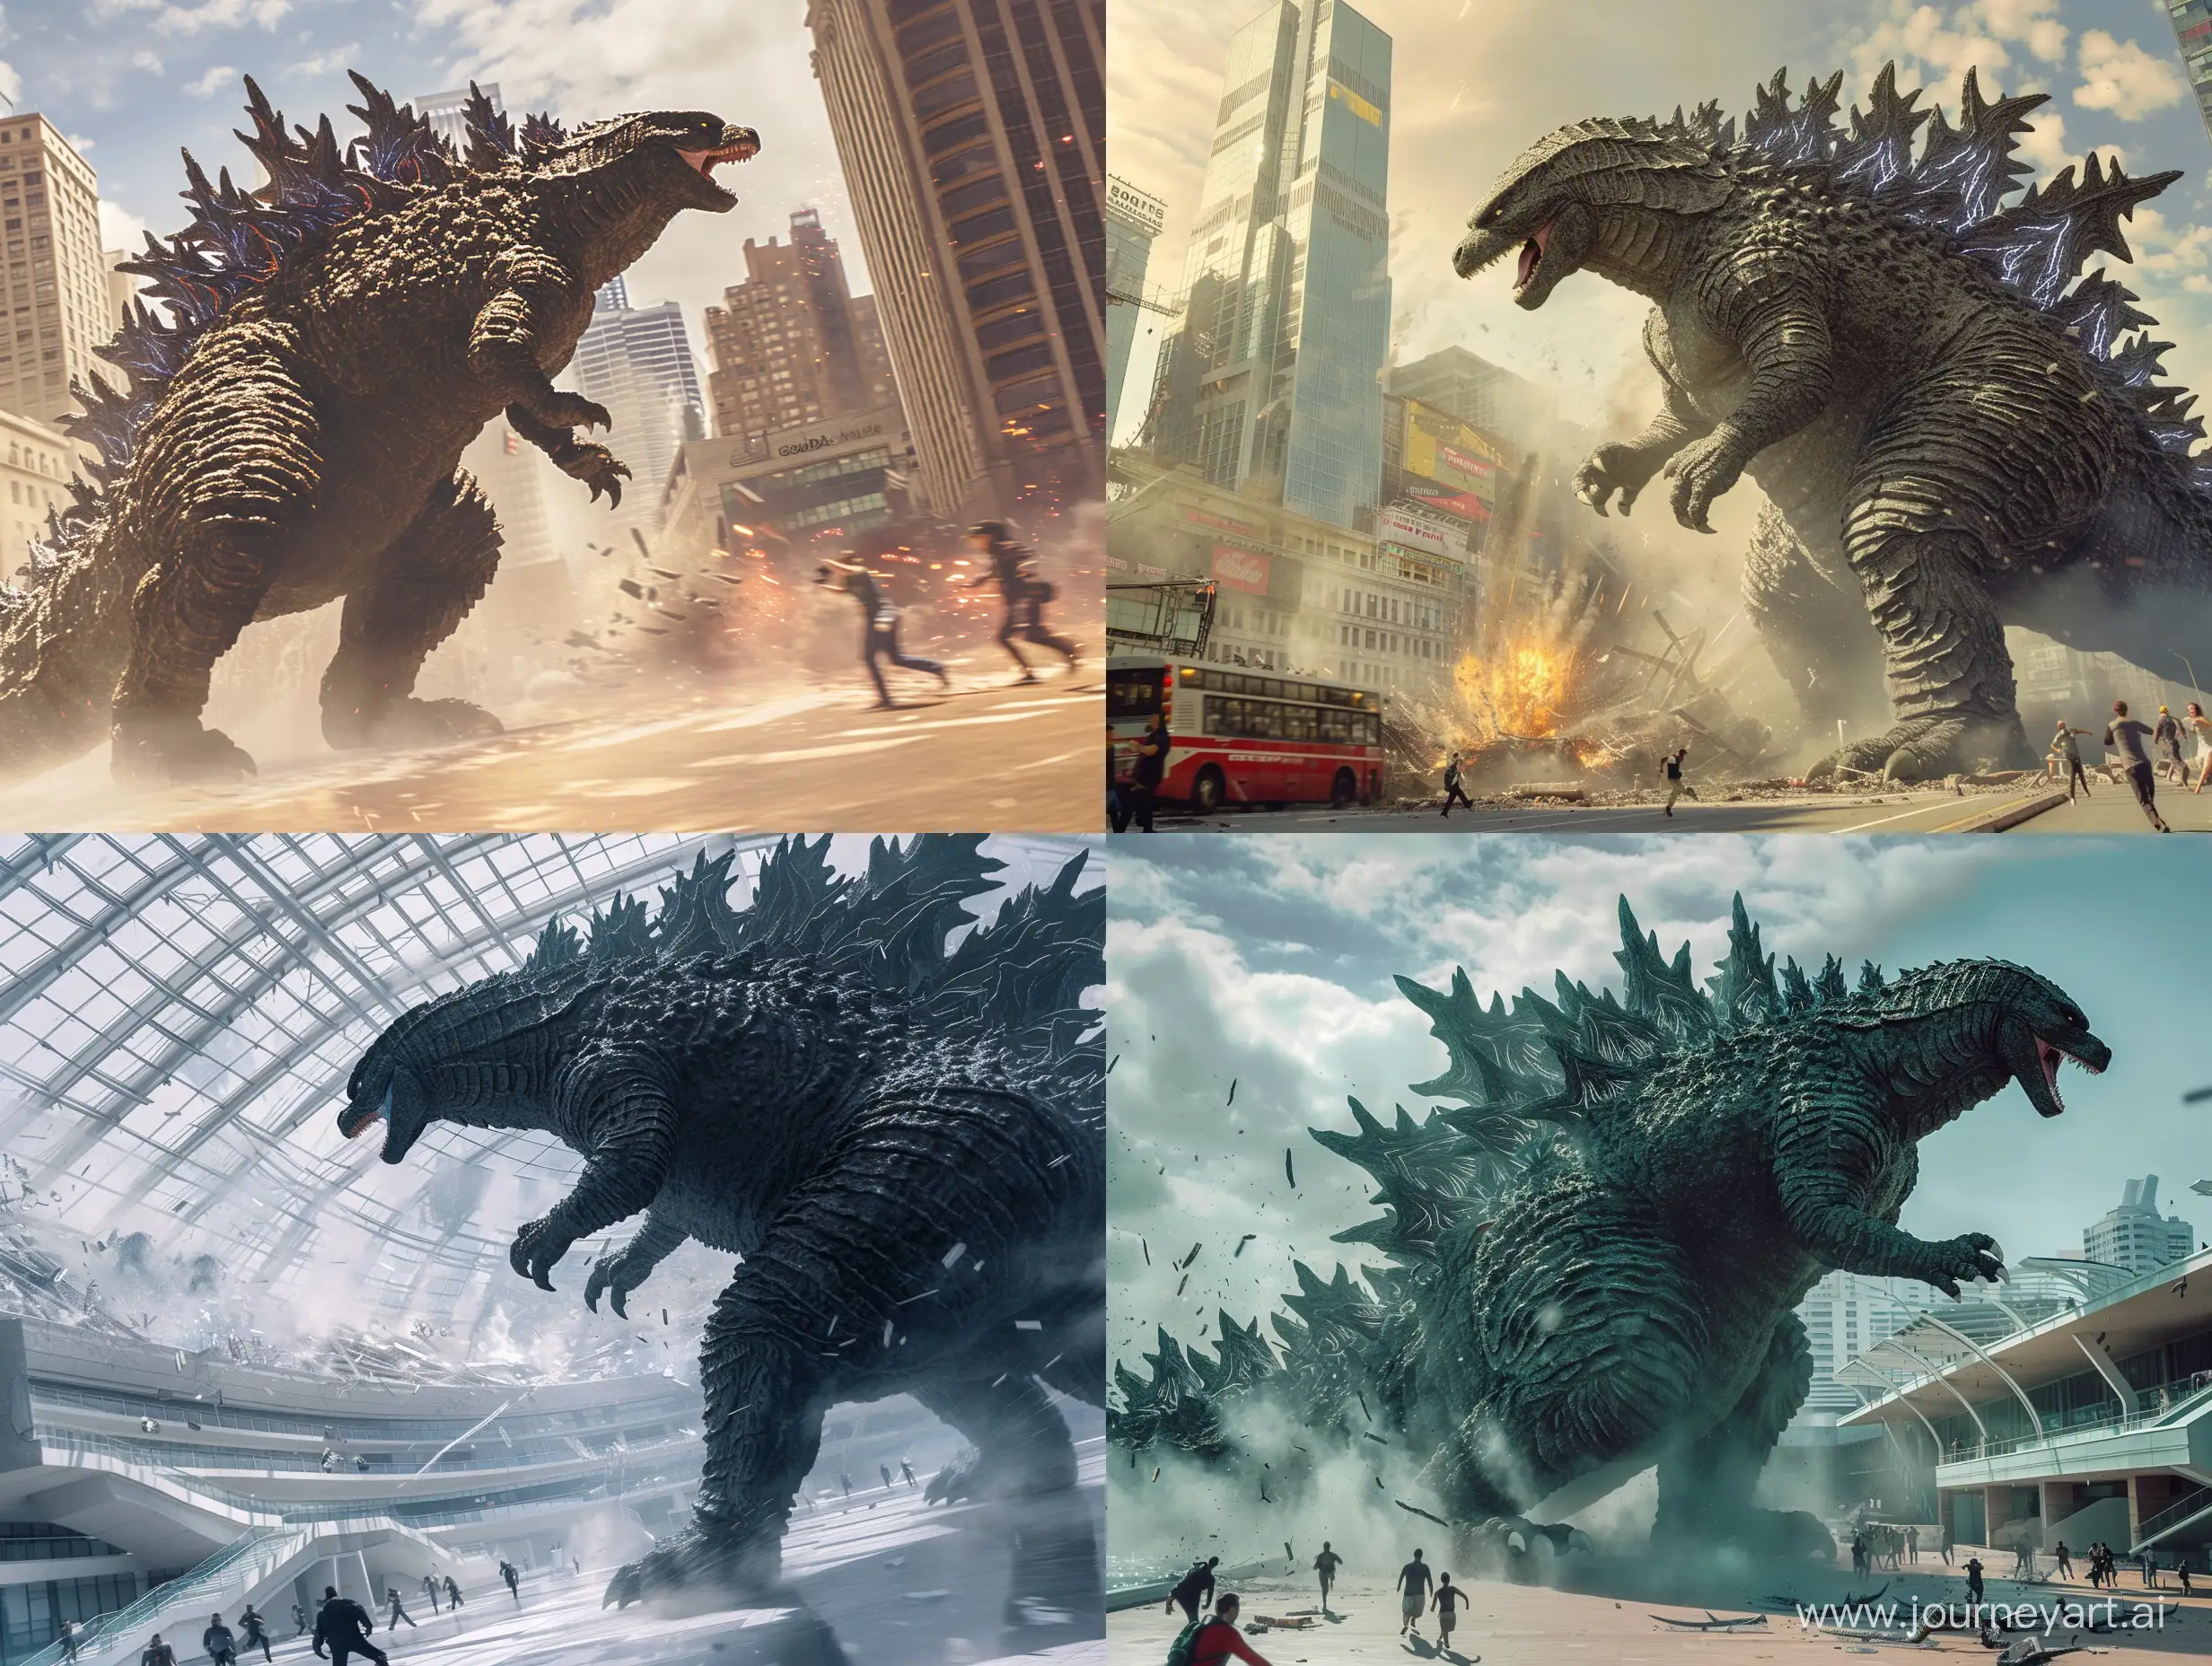 cinematic still, ultra wide angle, Godzilla rampaging through a modern city, building destruction, people running, kaiju chaos , realistic, 8k 